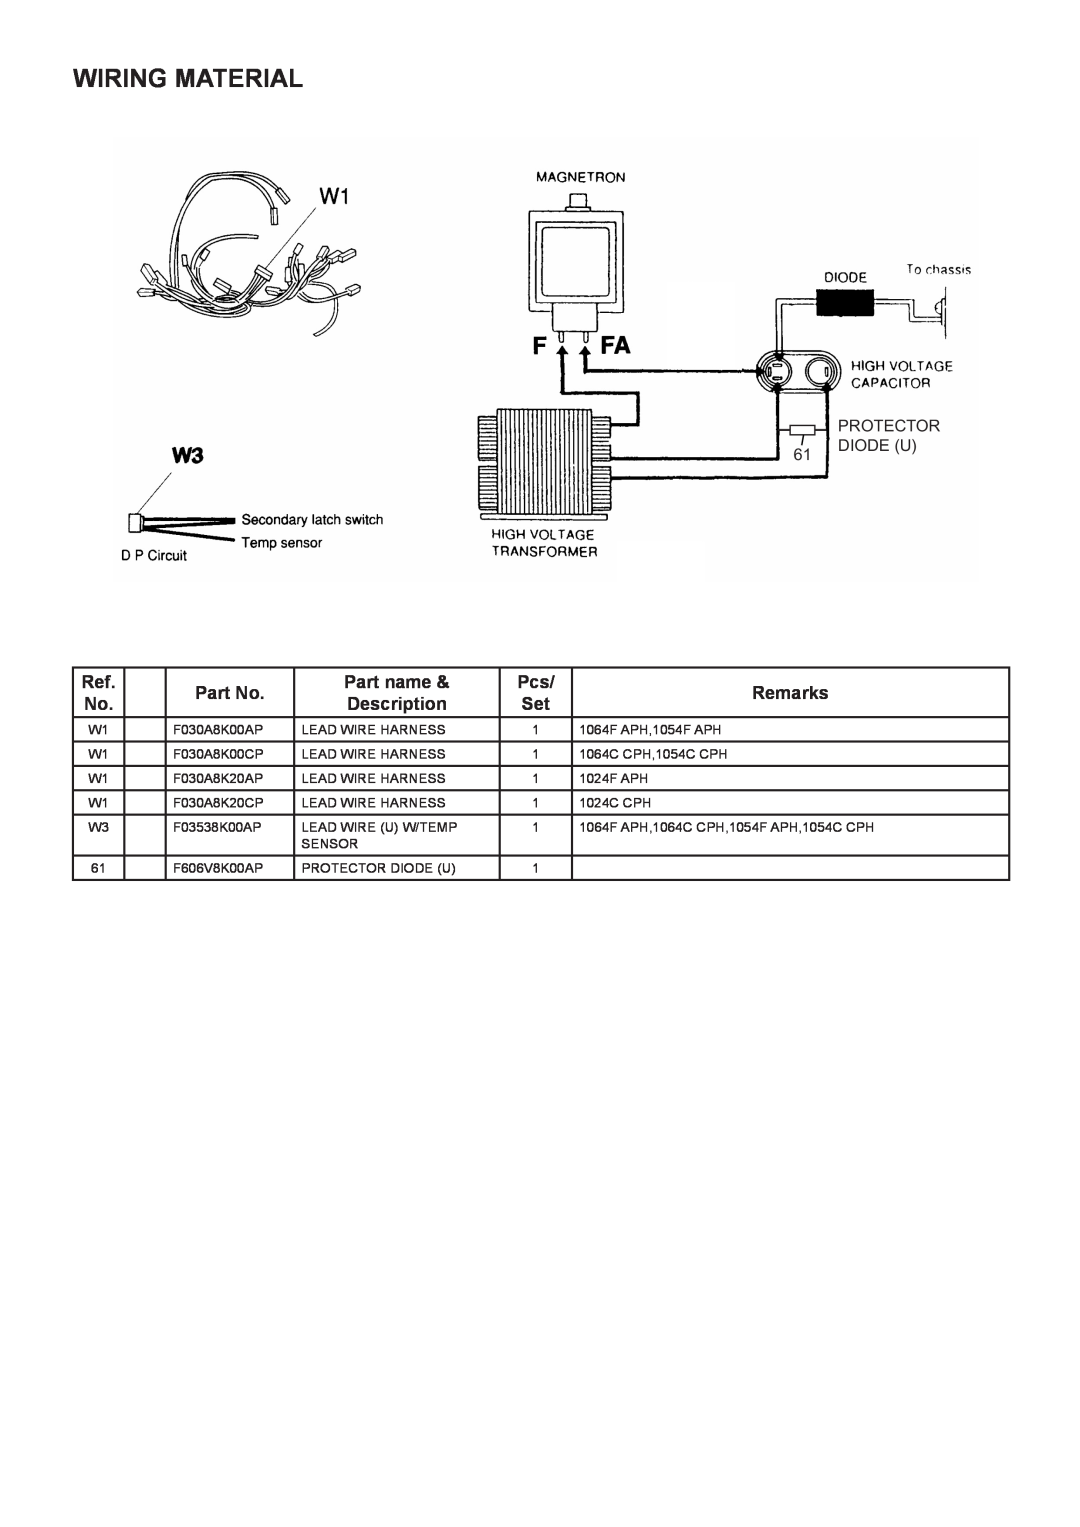 Panasonic NE-1064F, NE-1064C, NE-1054F, NE-1054C Wiring Material, Part name, Remarks, Description, Protector Diode U 